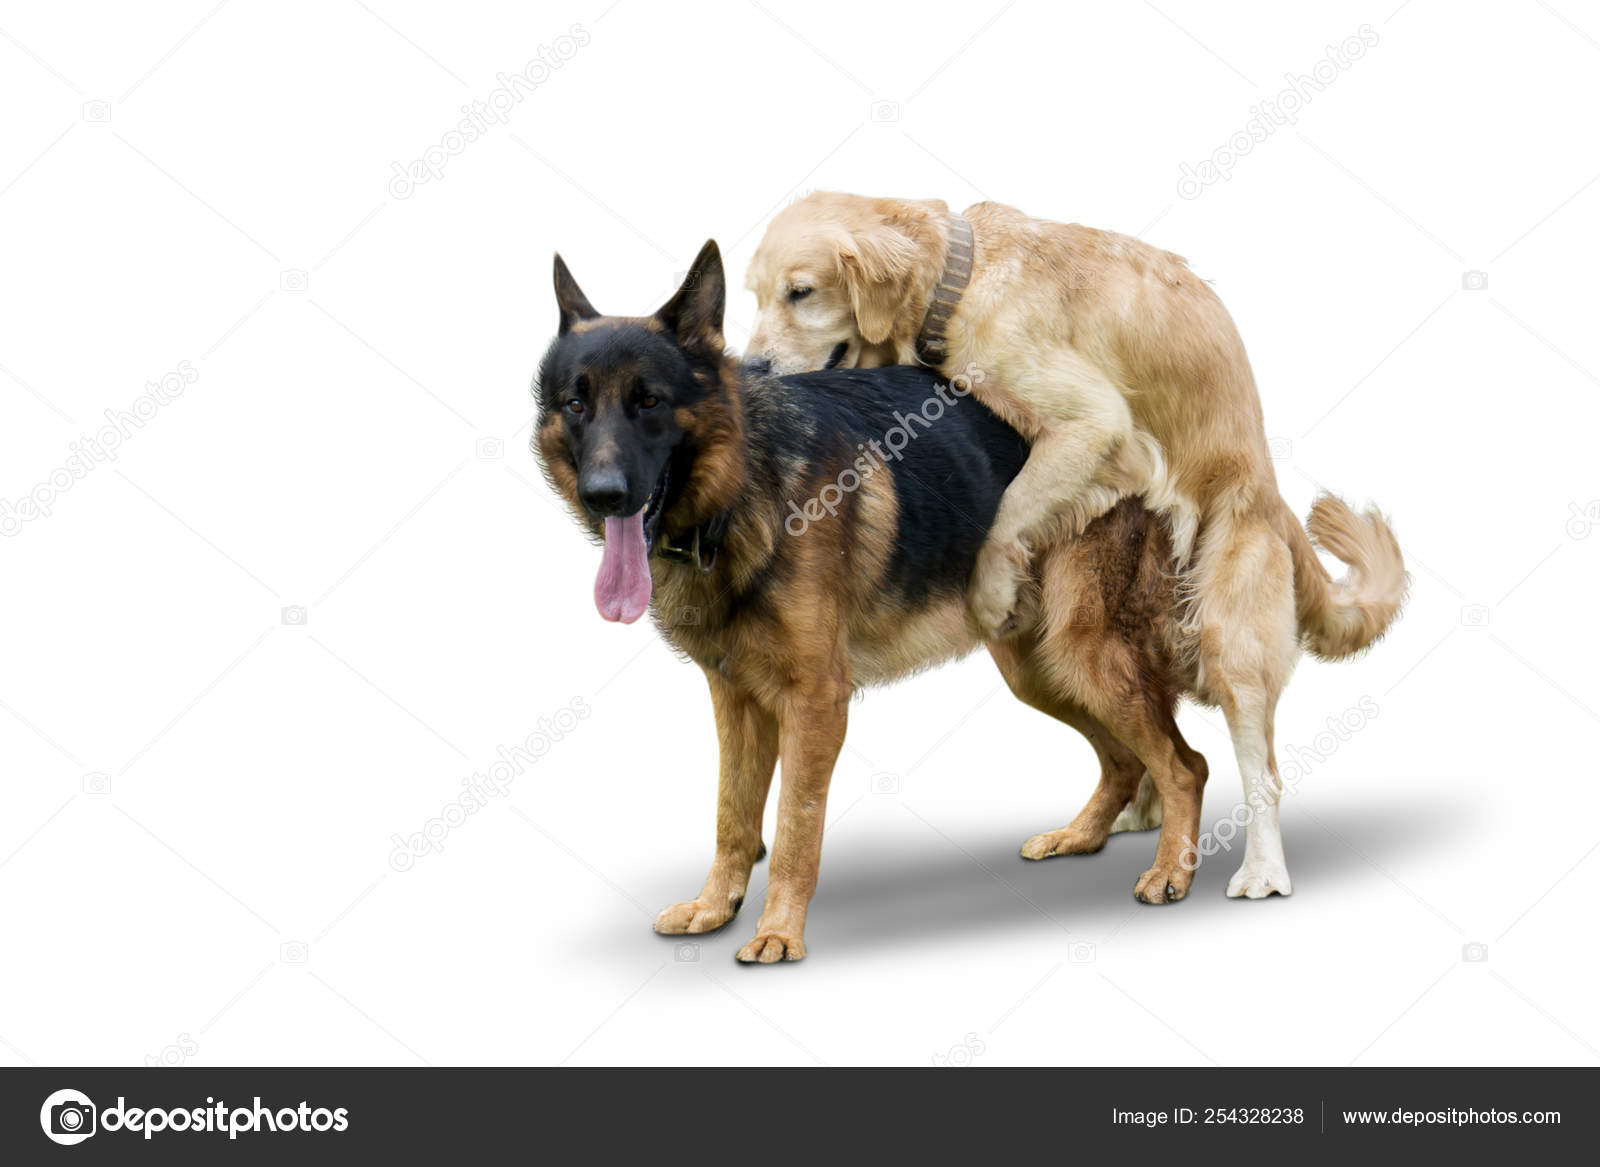 Retriever dog mates with German 